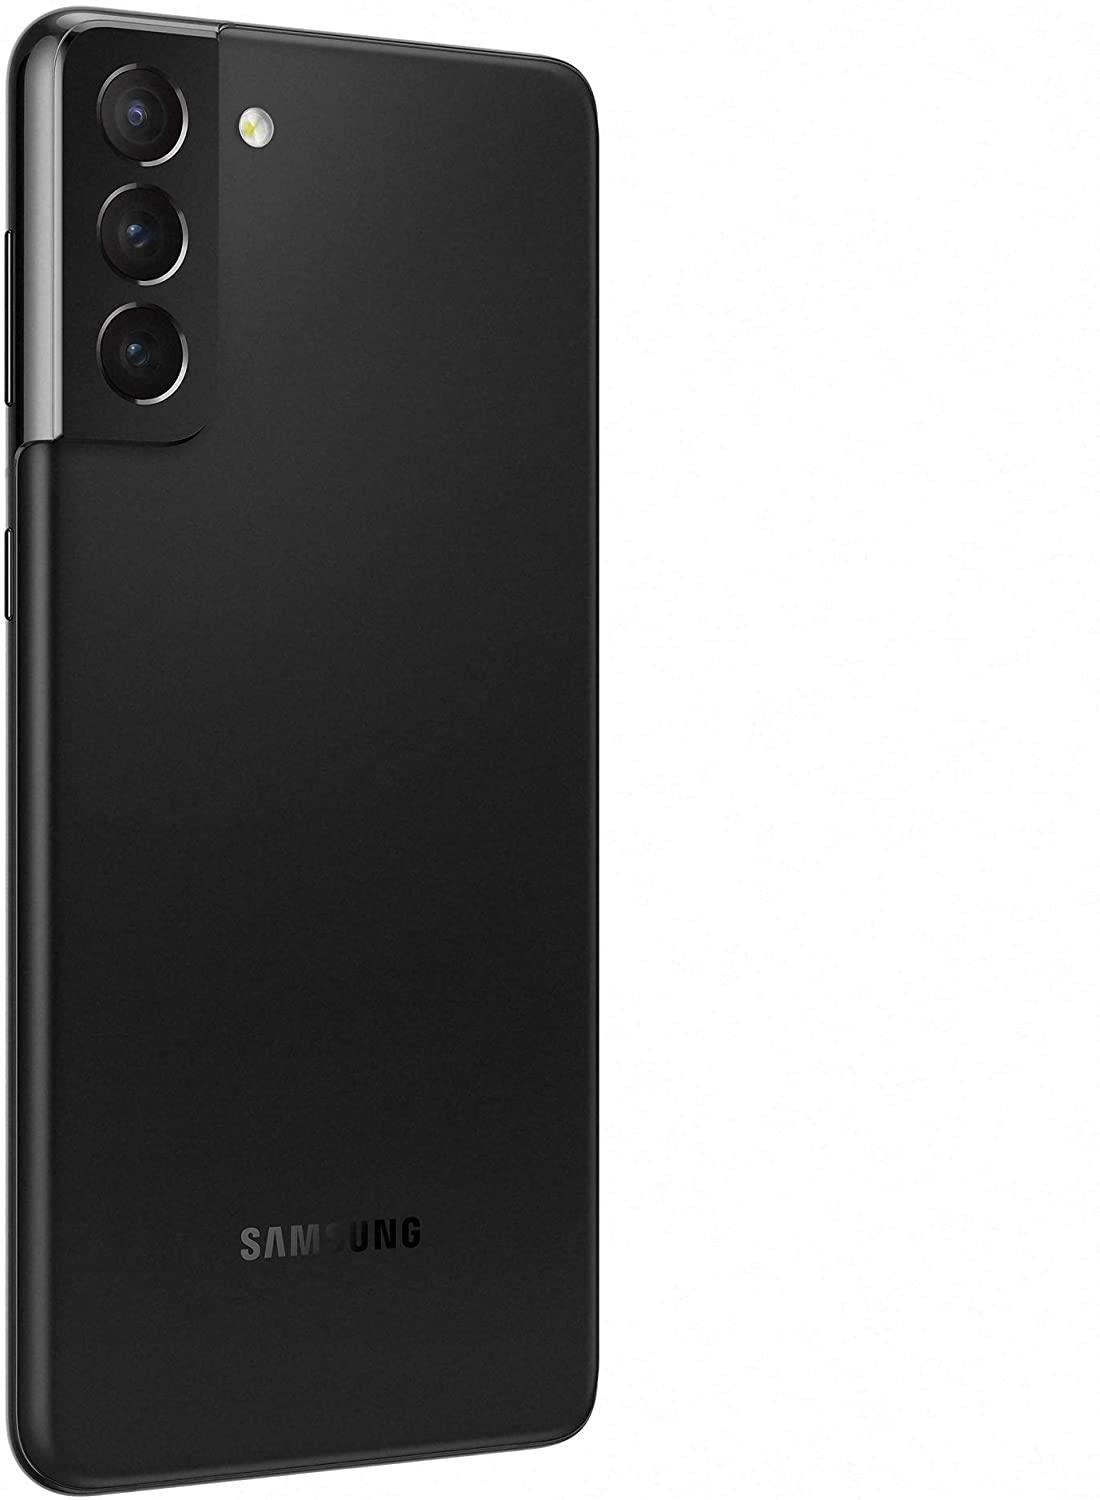 Samsung Galaxy S21+ Plus 5G Smartphone Unlocked 128-256GB